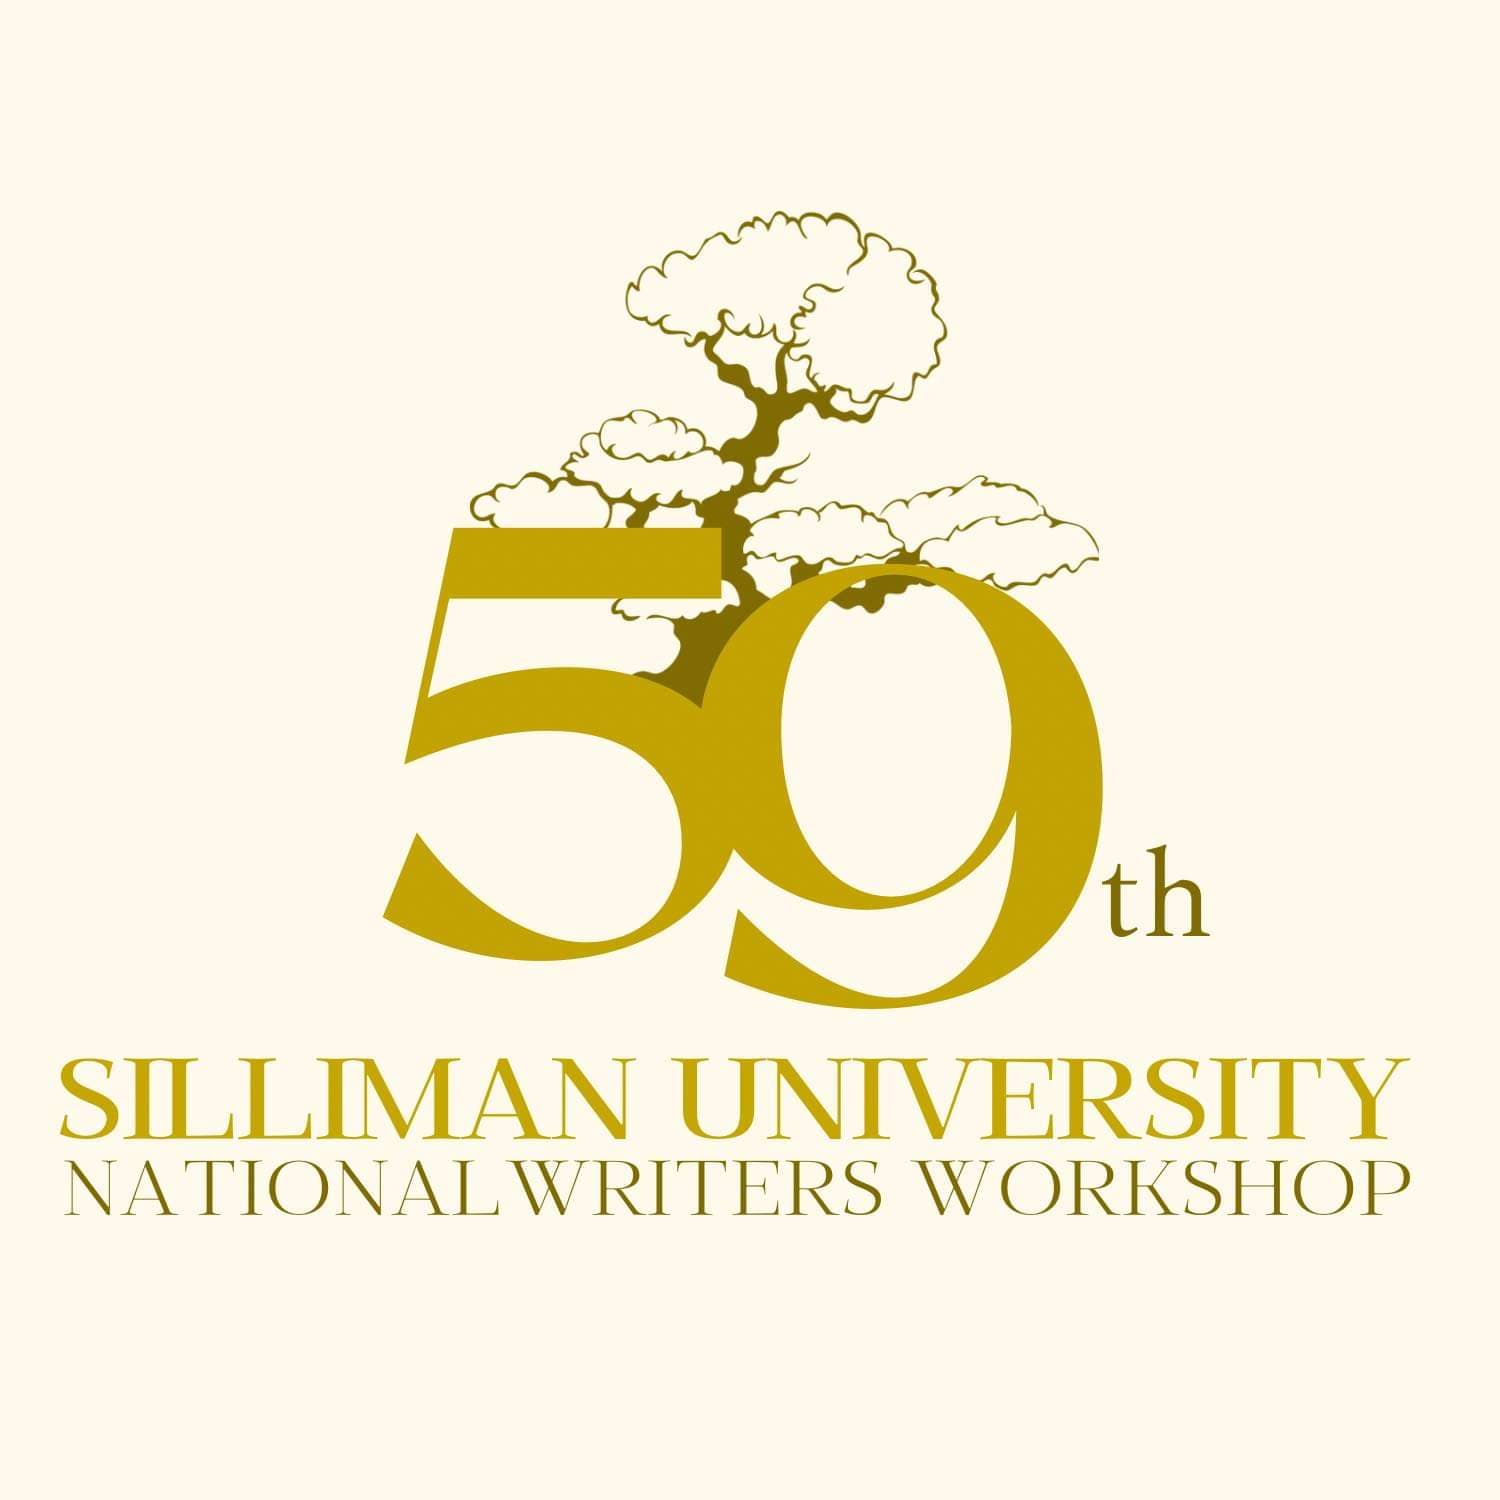 Silliman writers workshop goes online